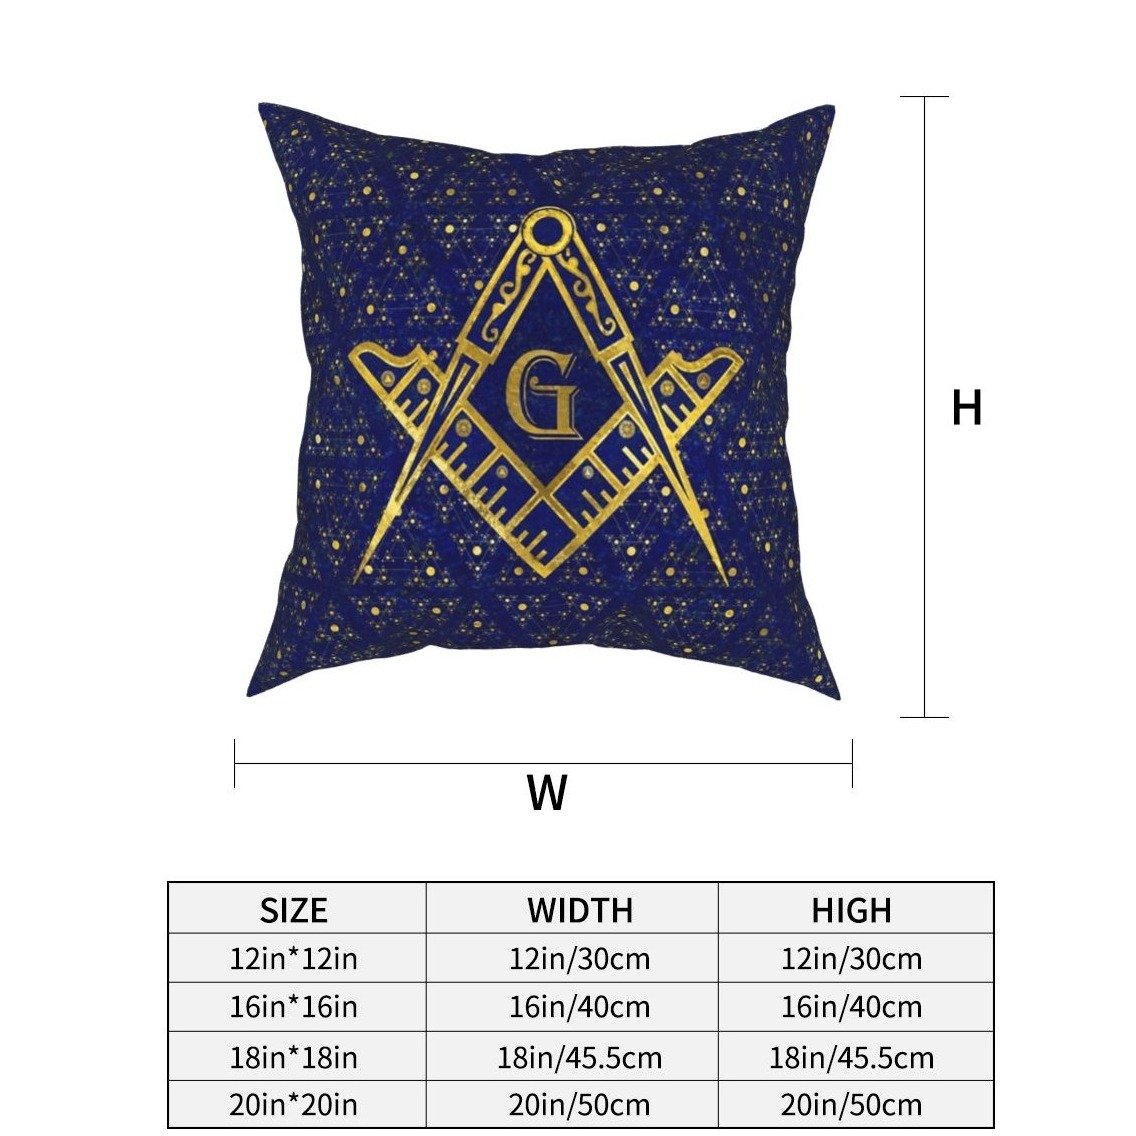 Master Mason Blue Lodge Pillowcase - Compass & Square G Blue night - Bricks Masons